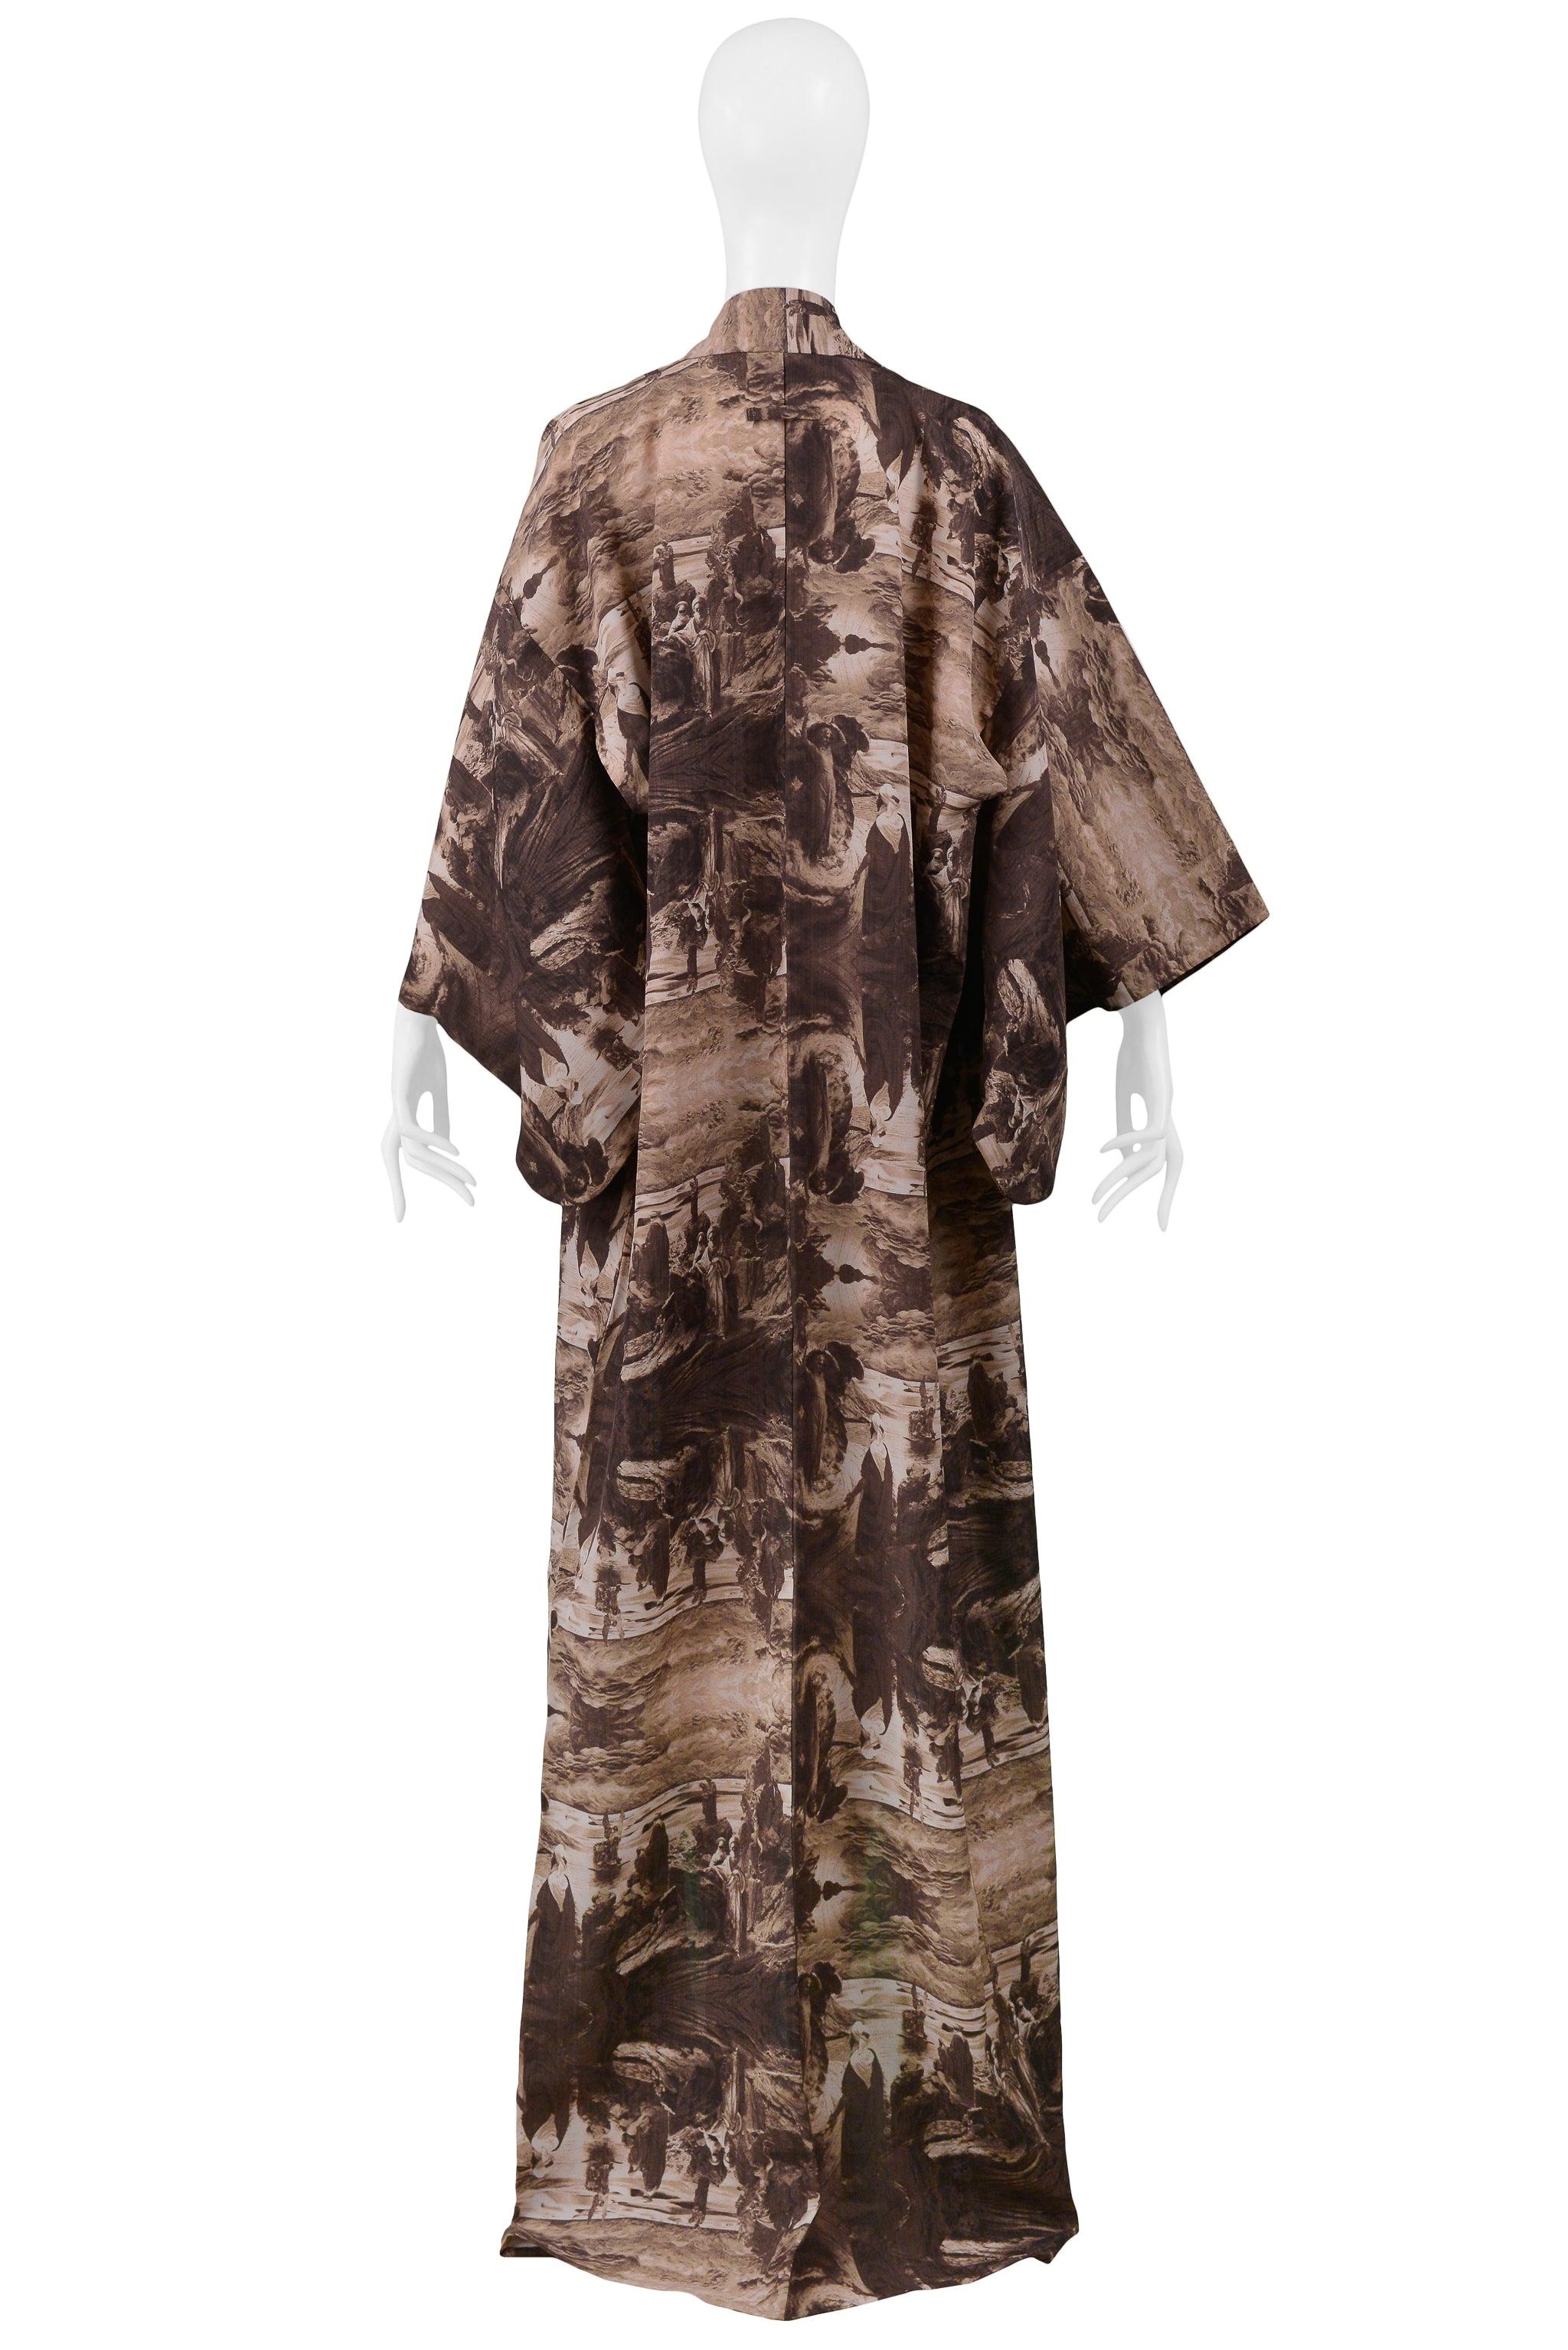 Jean Paul Gaultier Sepia Nomadic Desert Kimono 2002 3